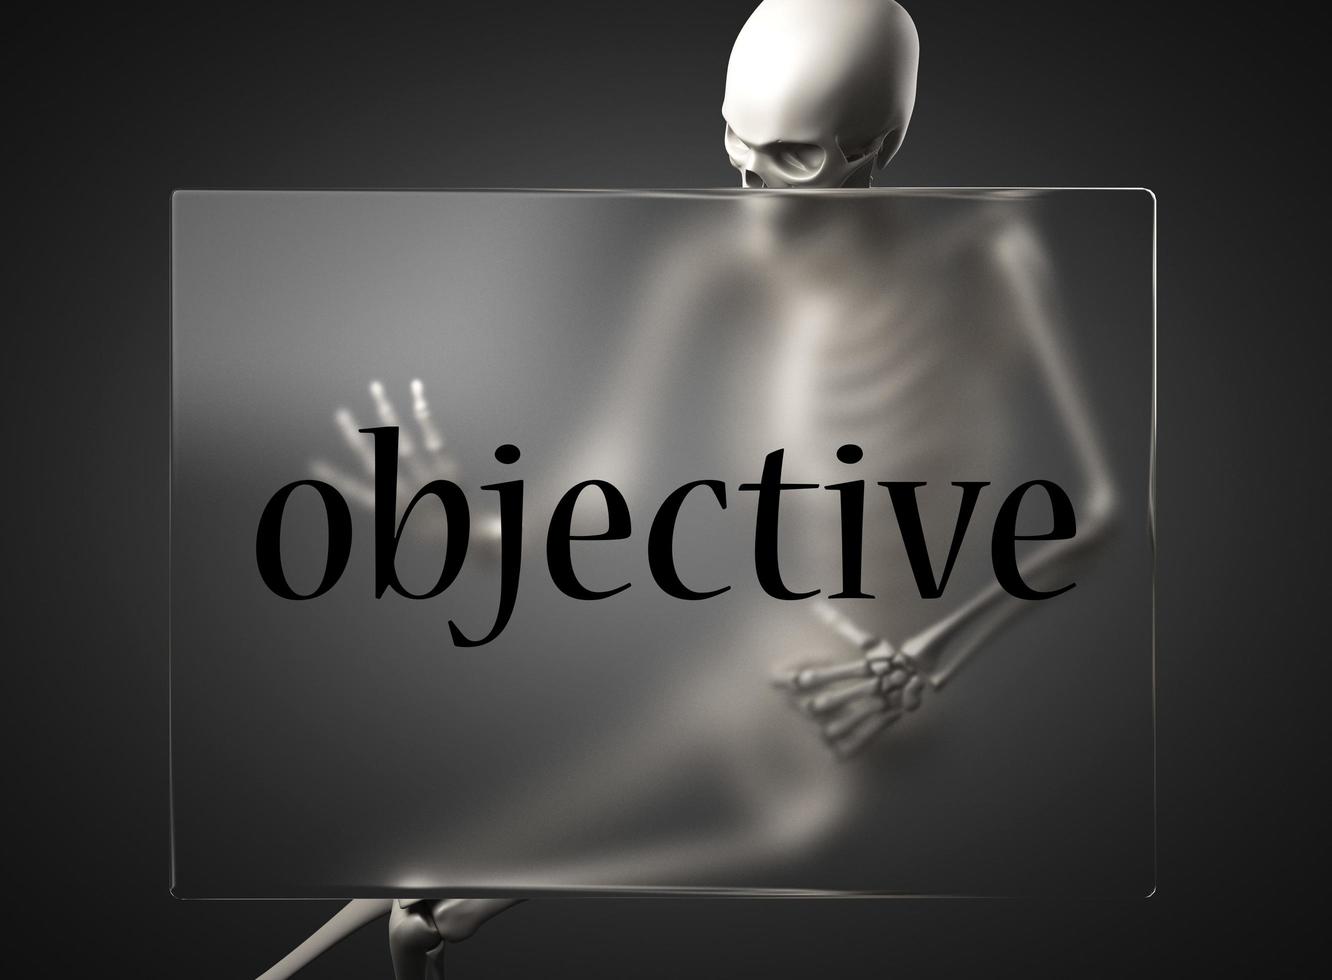 palabra objetiva sobre vidrio y esqueleto foto